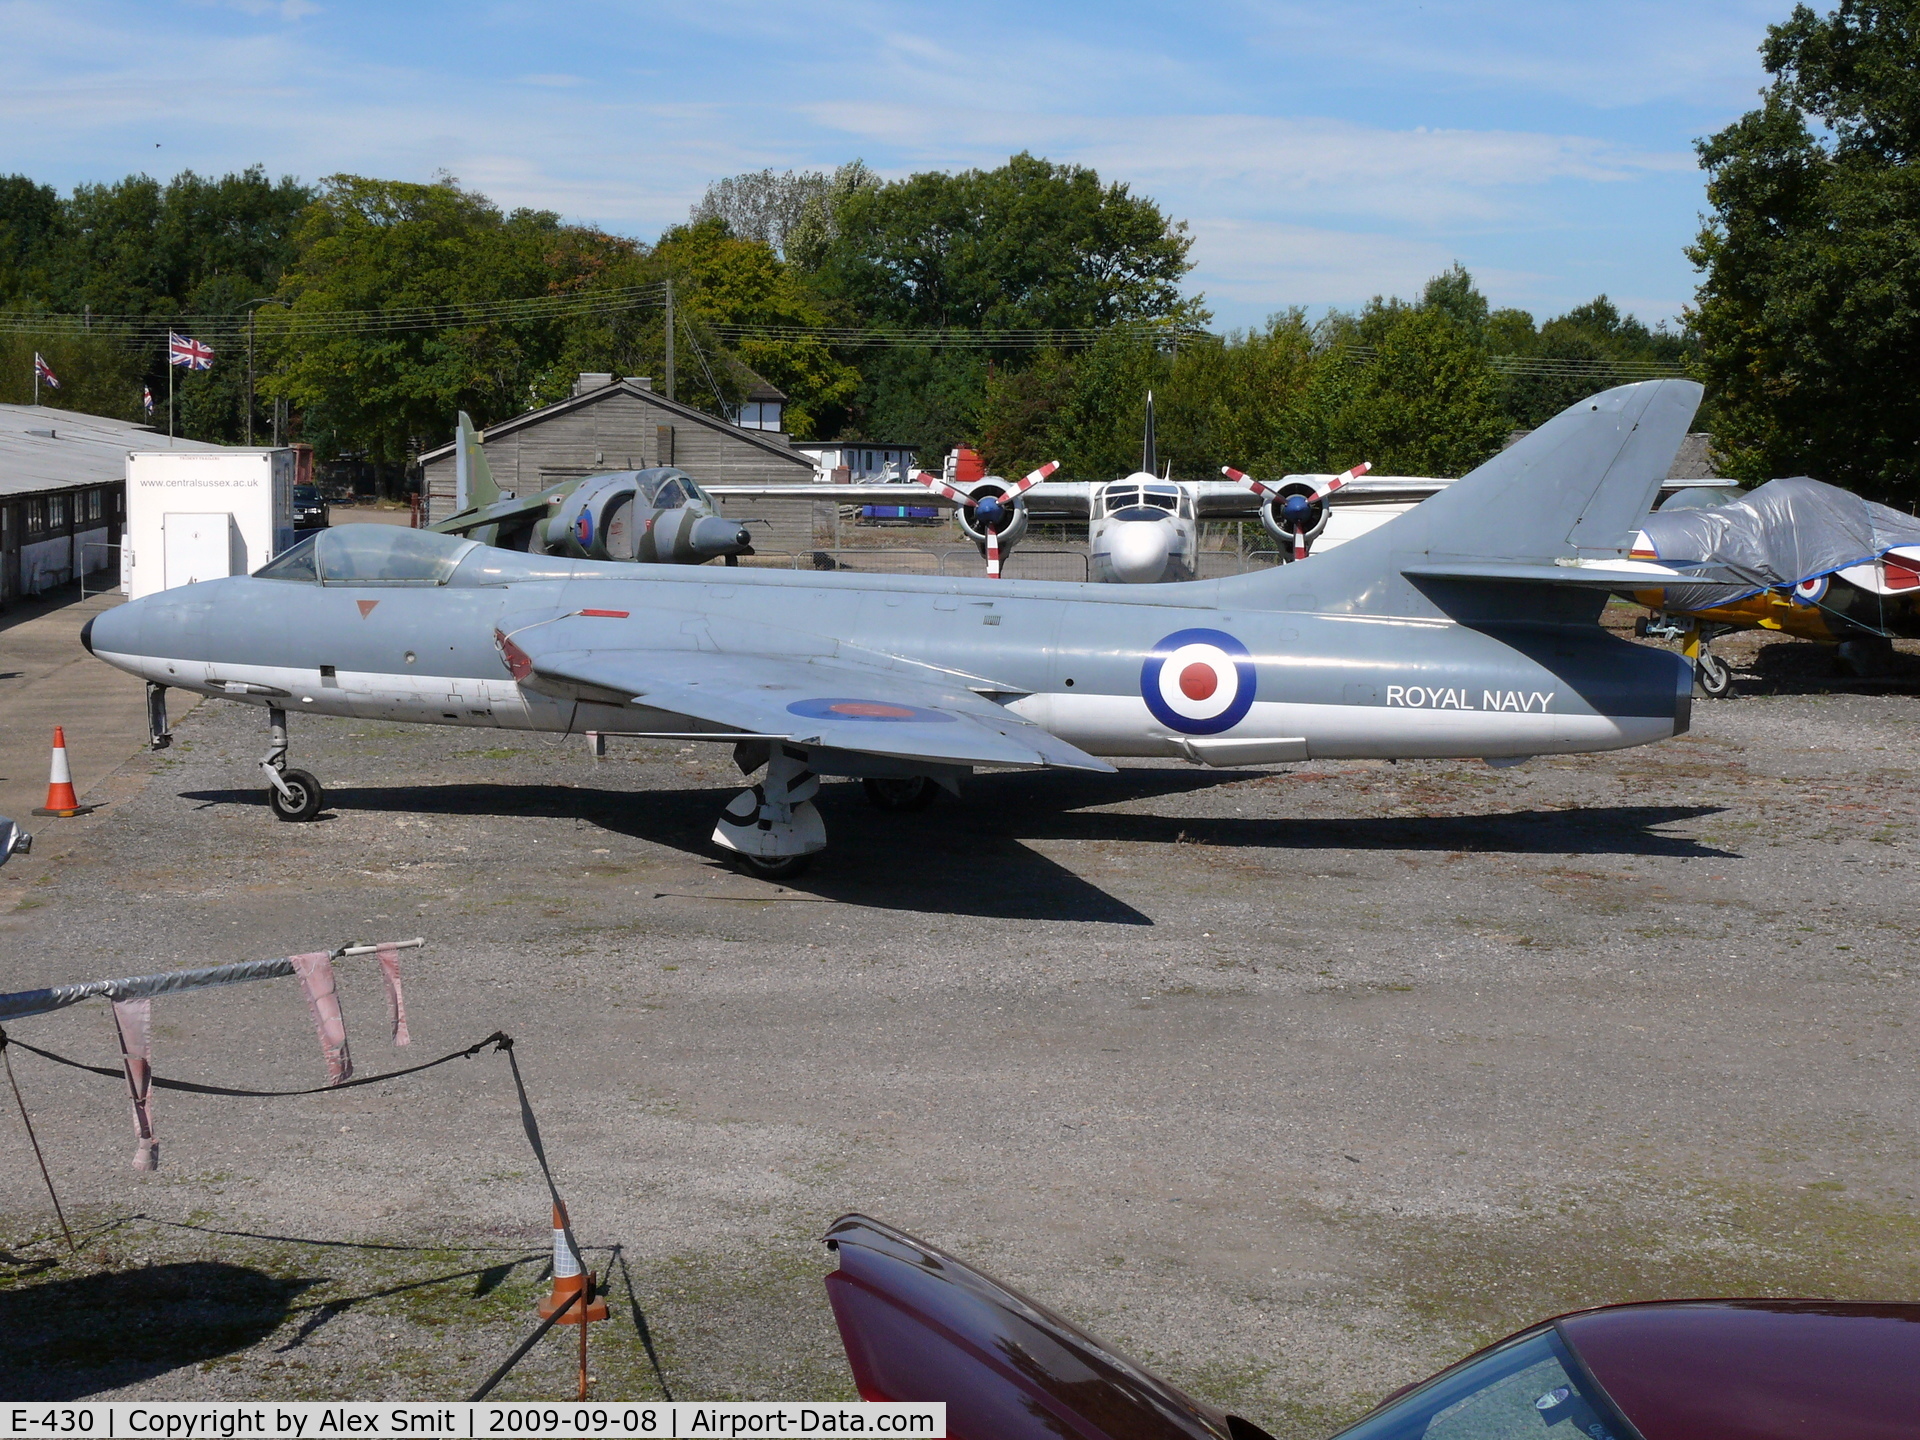 E-430, 1958 Hawker Hunter F.51 C/N 41H-680289, Hawker Hunter F51 E-430 ex Danish Air Force painted as Royal Navy